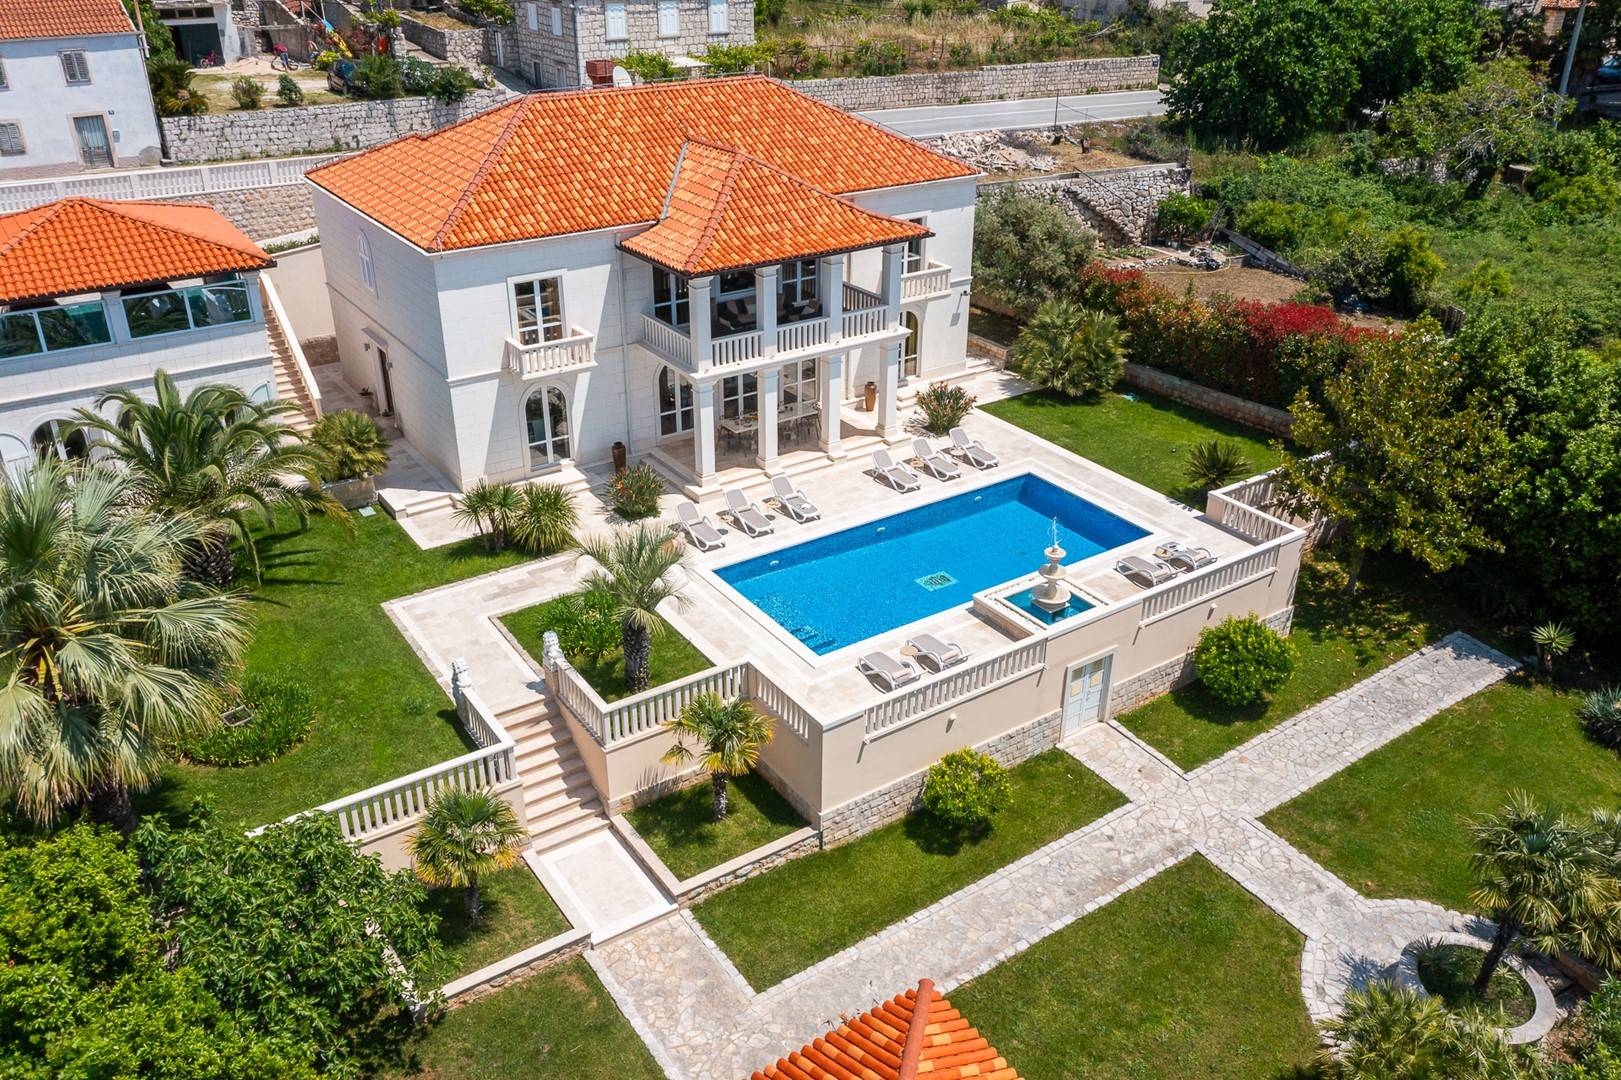 DUBROVNIK LUXURY VILLAS - Luxury Villa "La Villa" with pool and jacuzzi in Dubrovnik - Trsteno